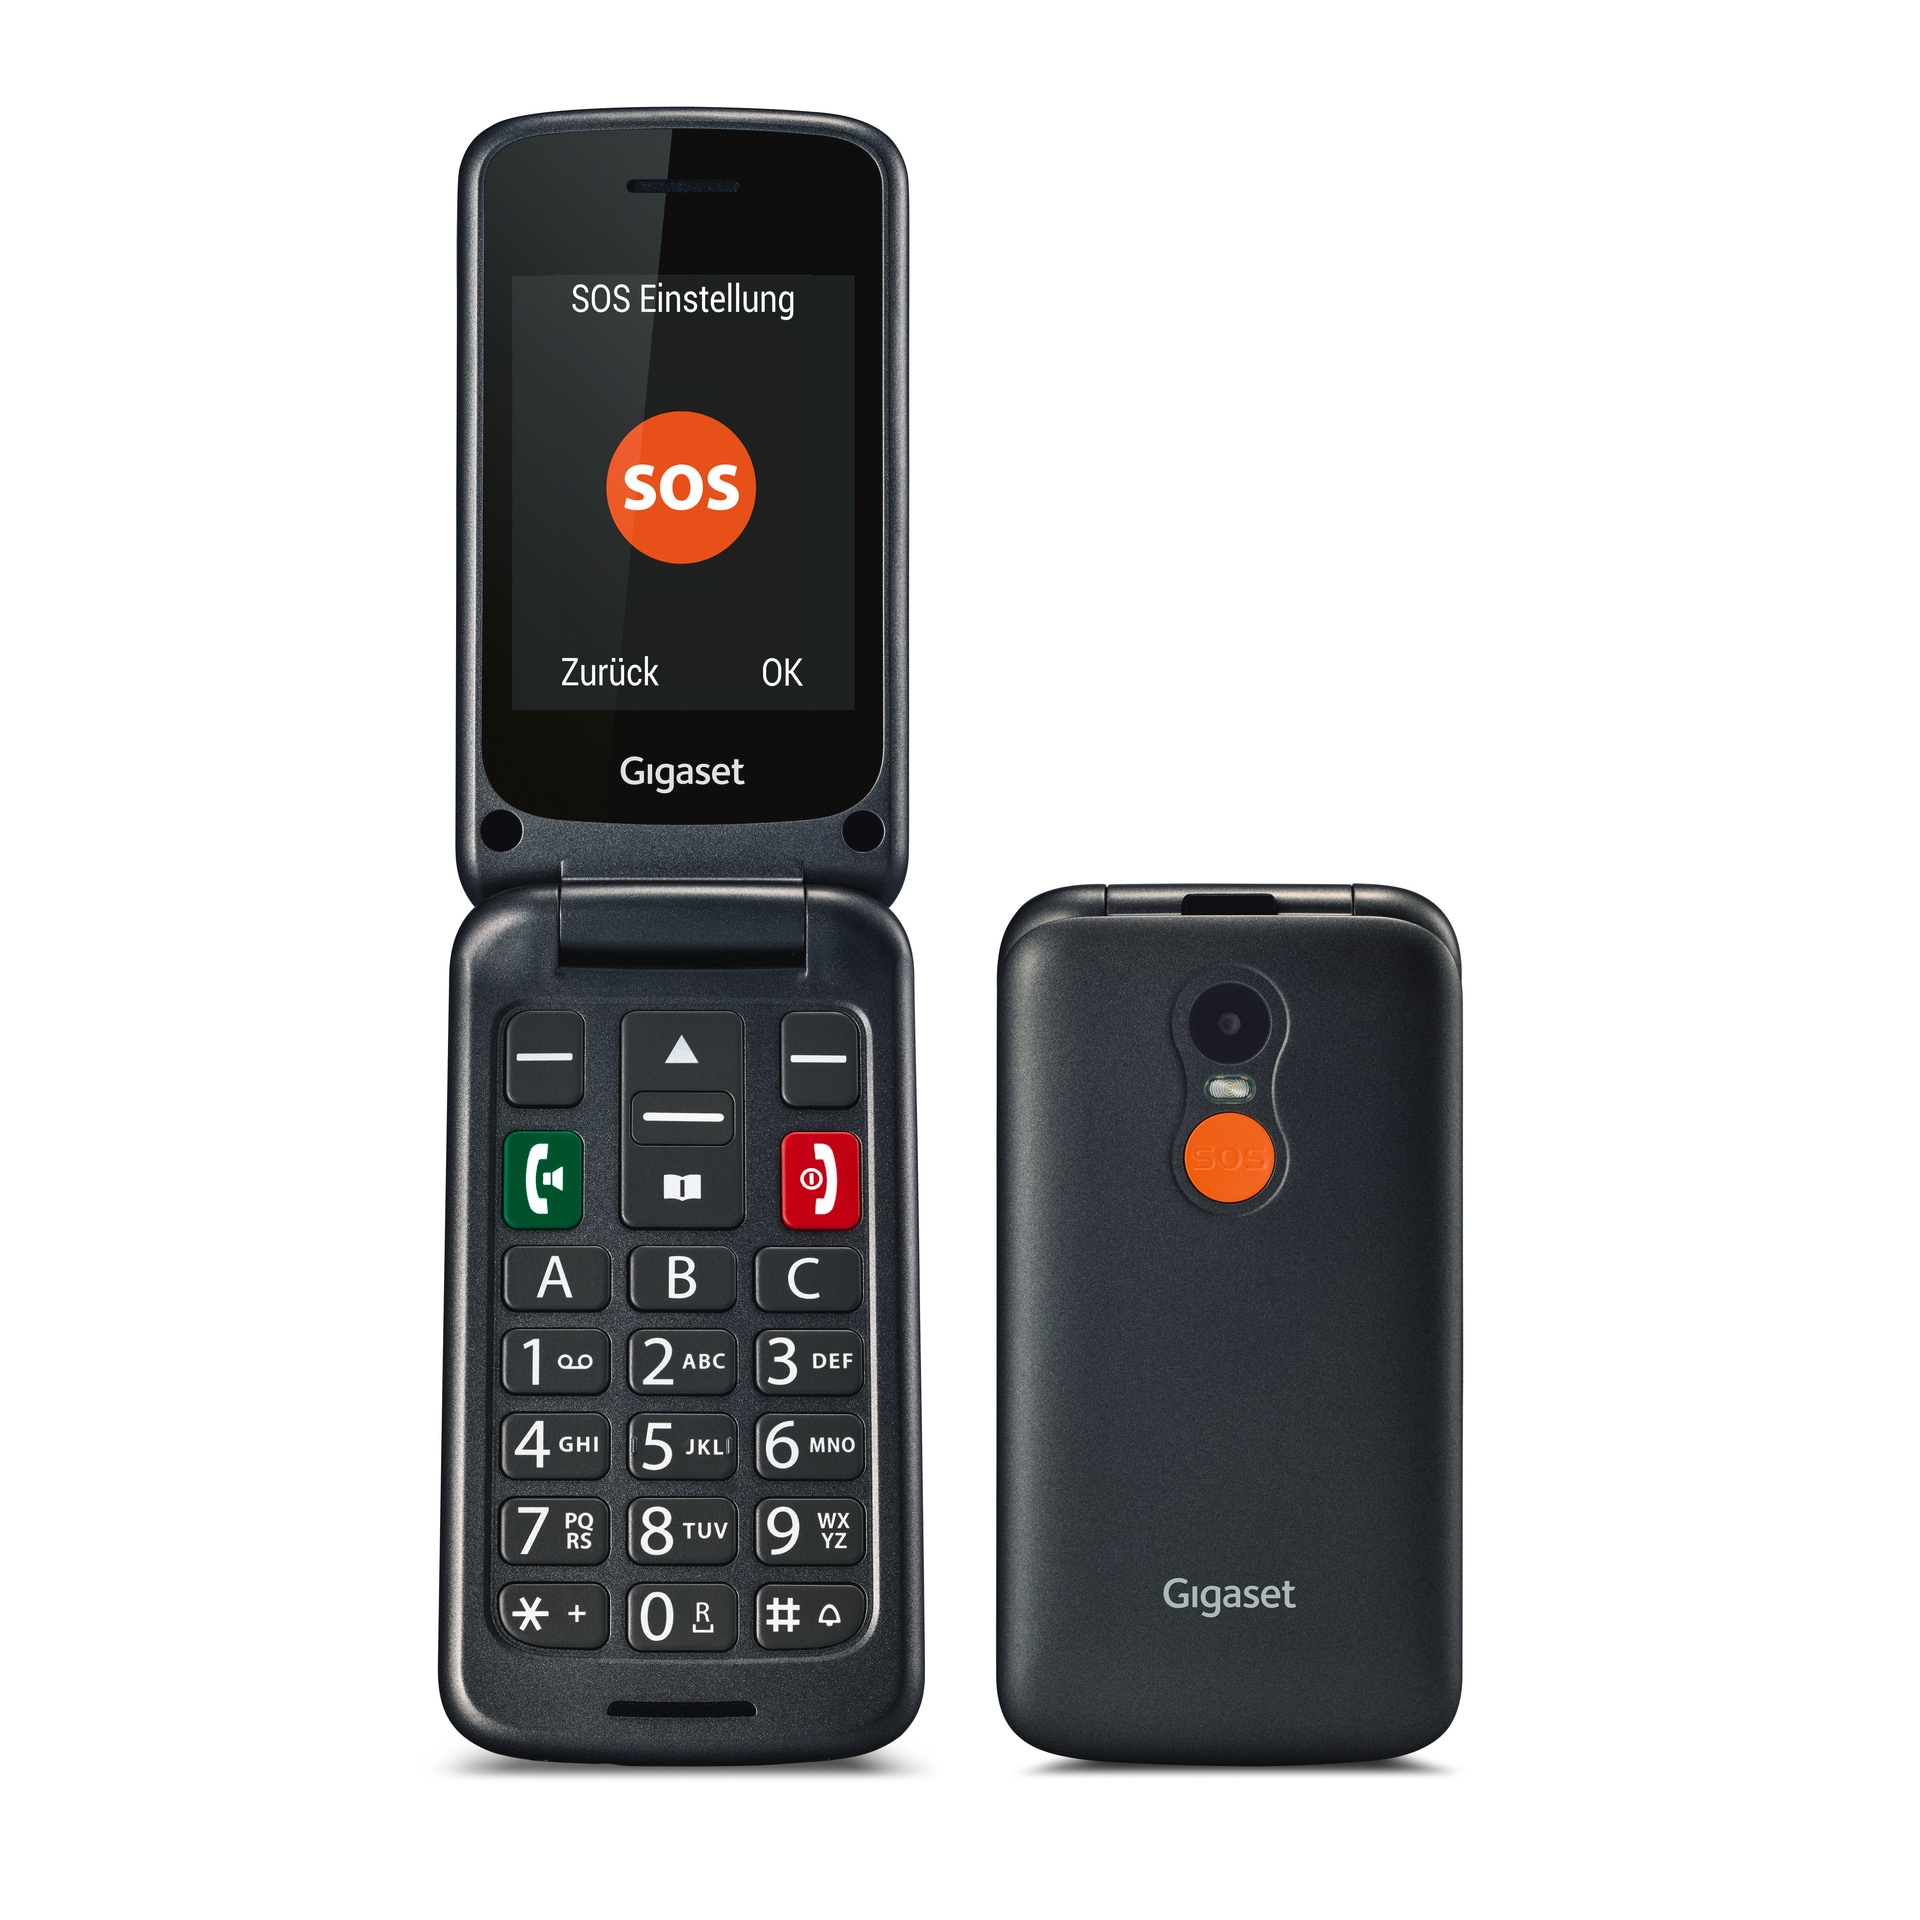 Smartphone »GL590«, schwarz, 7,3 cm/2,8 Zoll, 0,3 MP Kamera